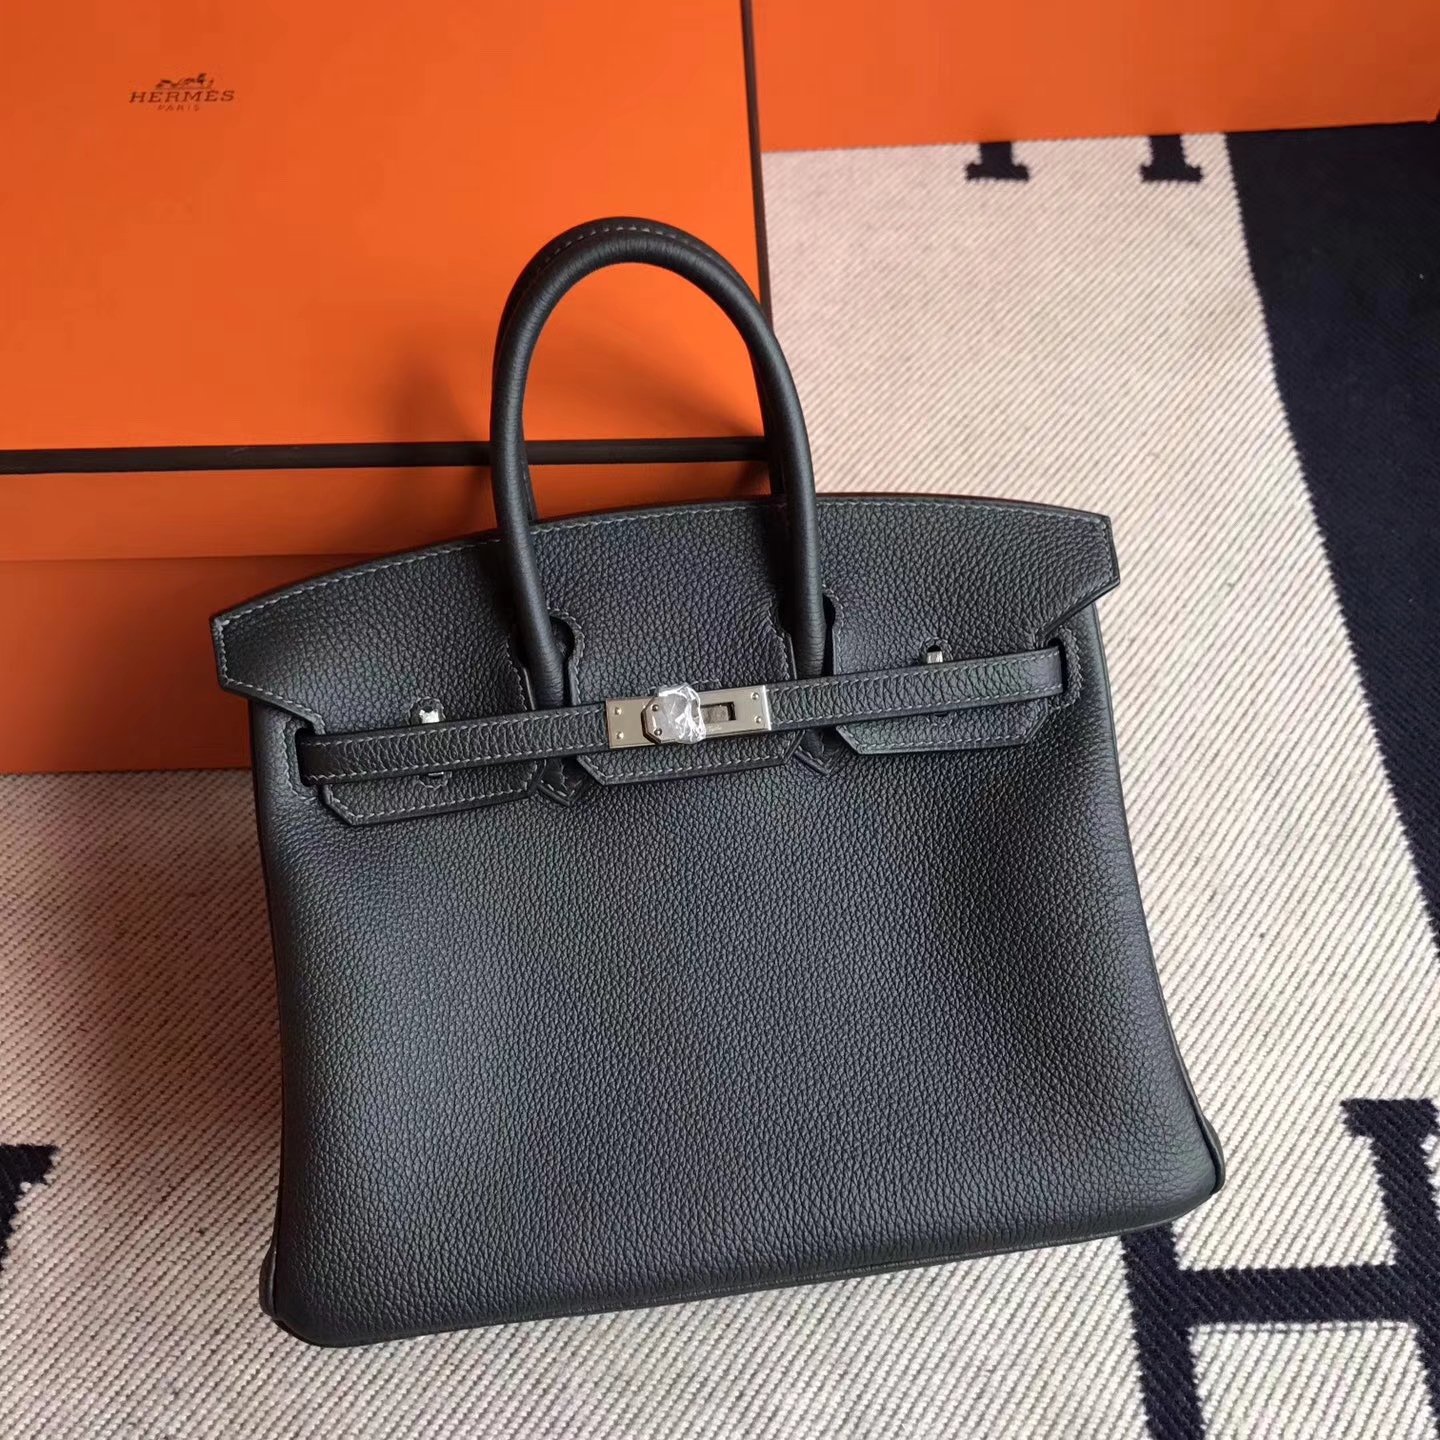 Sale Hermes Birkin Bag25cm in Ck88 Graphite Grey Togo Leather Silver Hardware